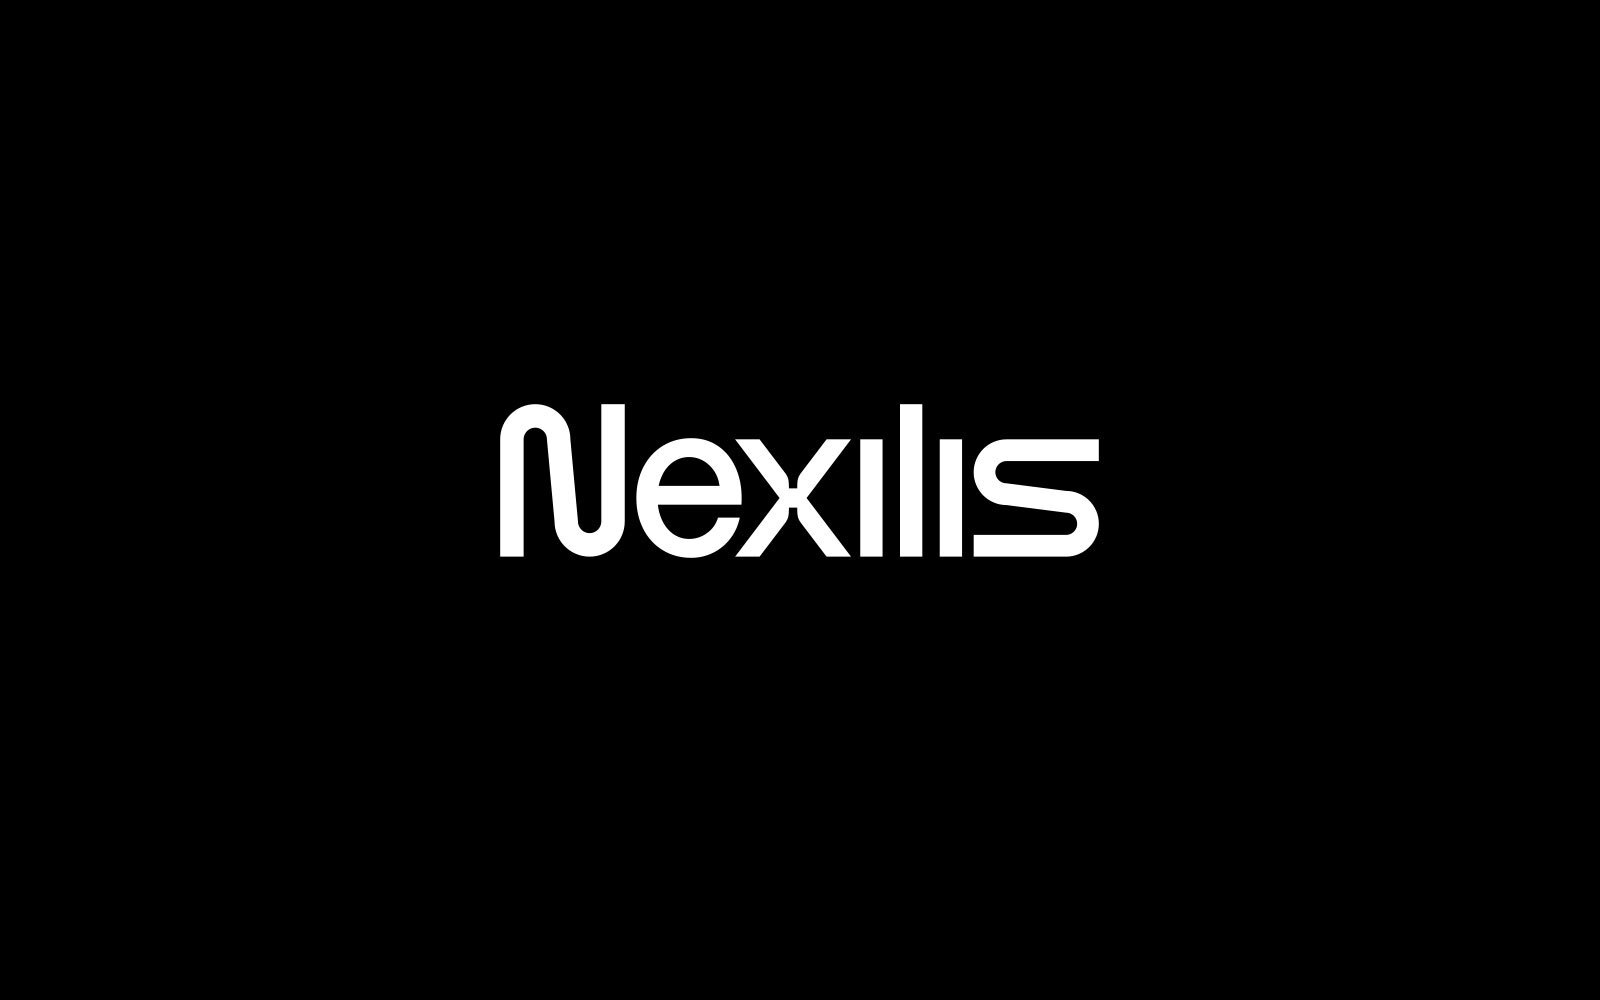 designs-3-nexilis-01